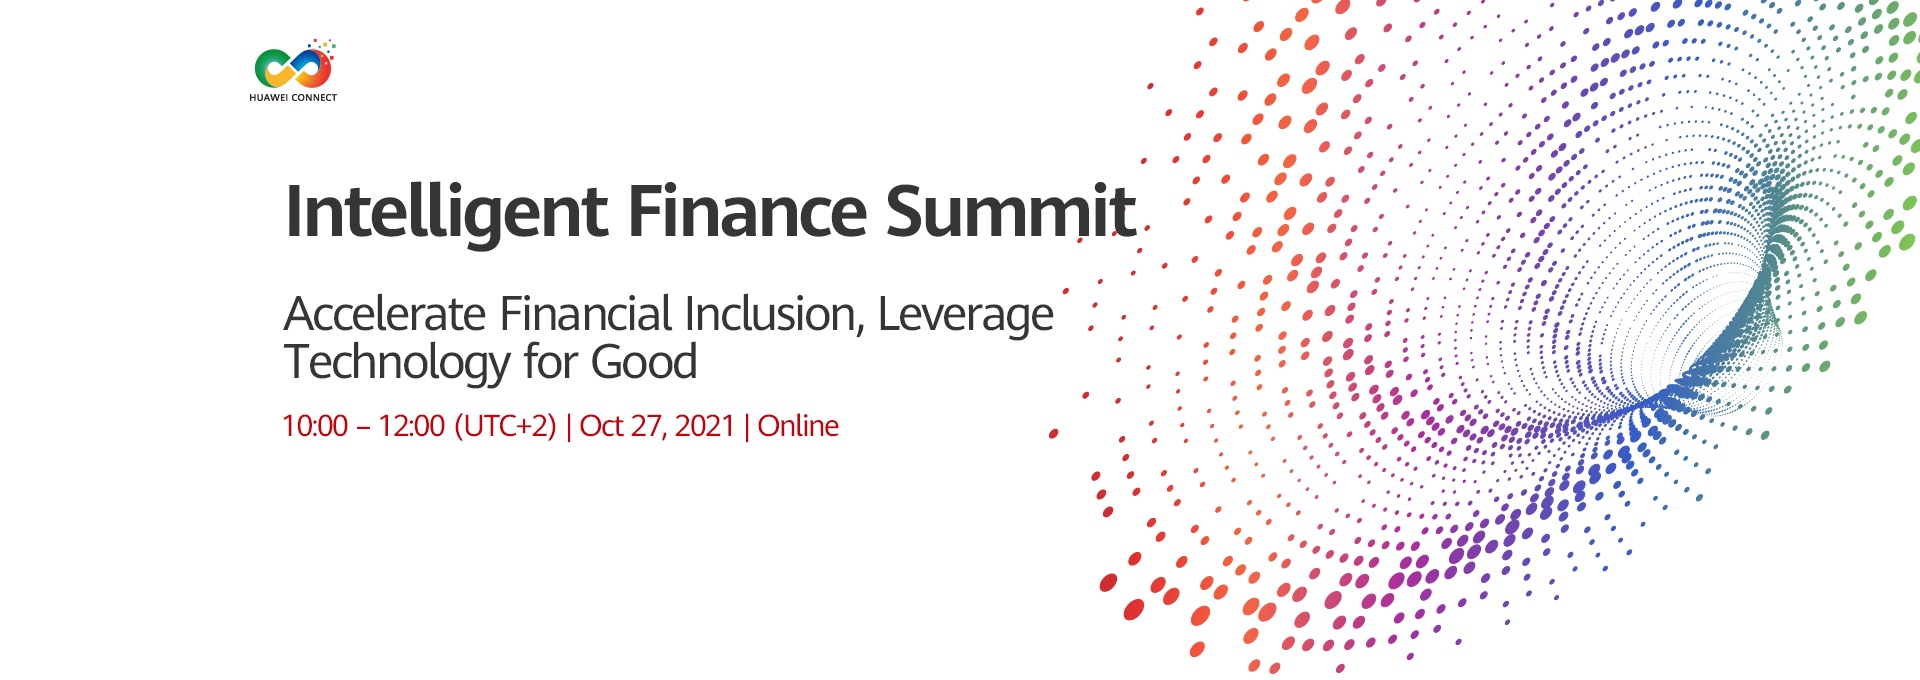 intelligent finance summit pc